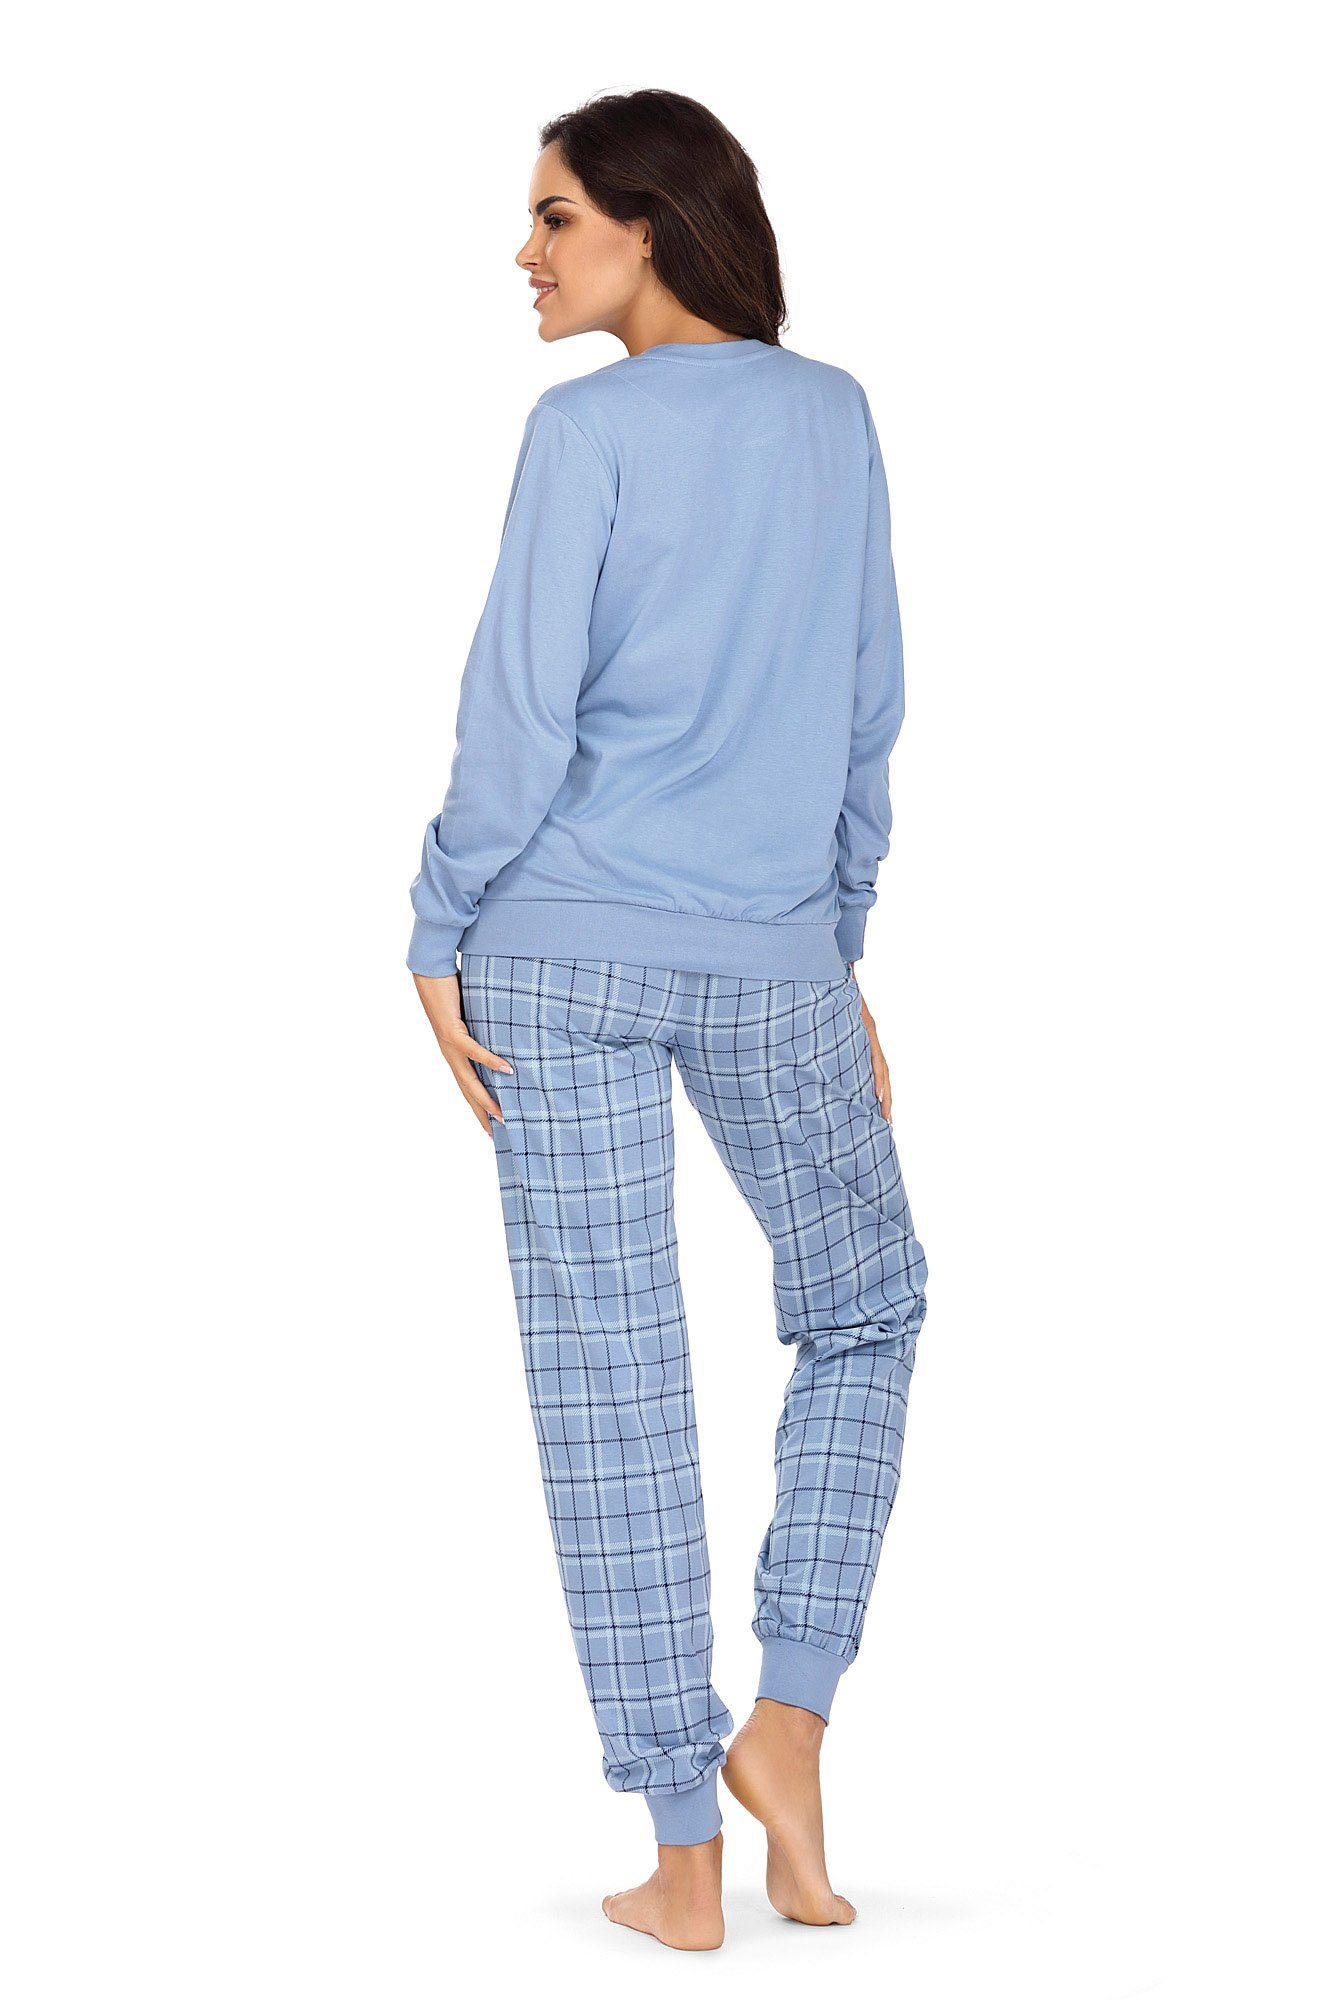 Damen Knopfleiste Set) Baumwolle Schlafanzug (Set, tlg., 2-teilig blau Schlafanzug Pastell comtessa 2 Pyjama